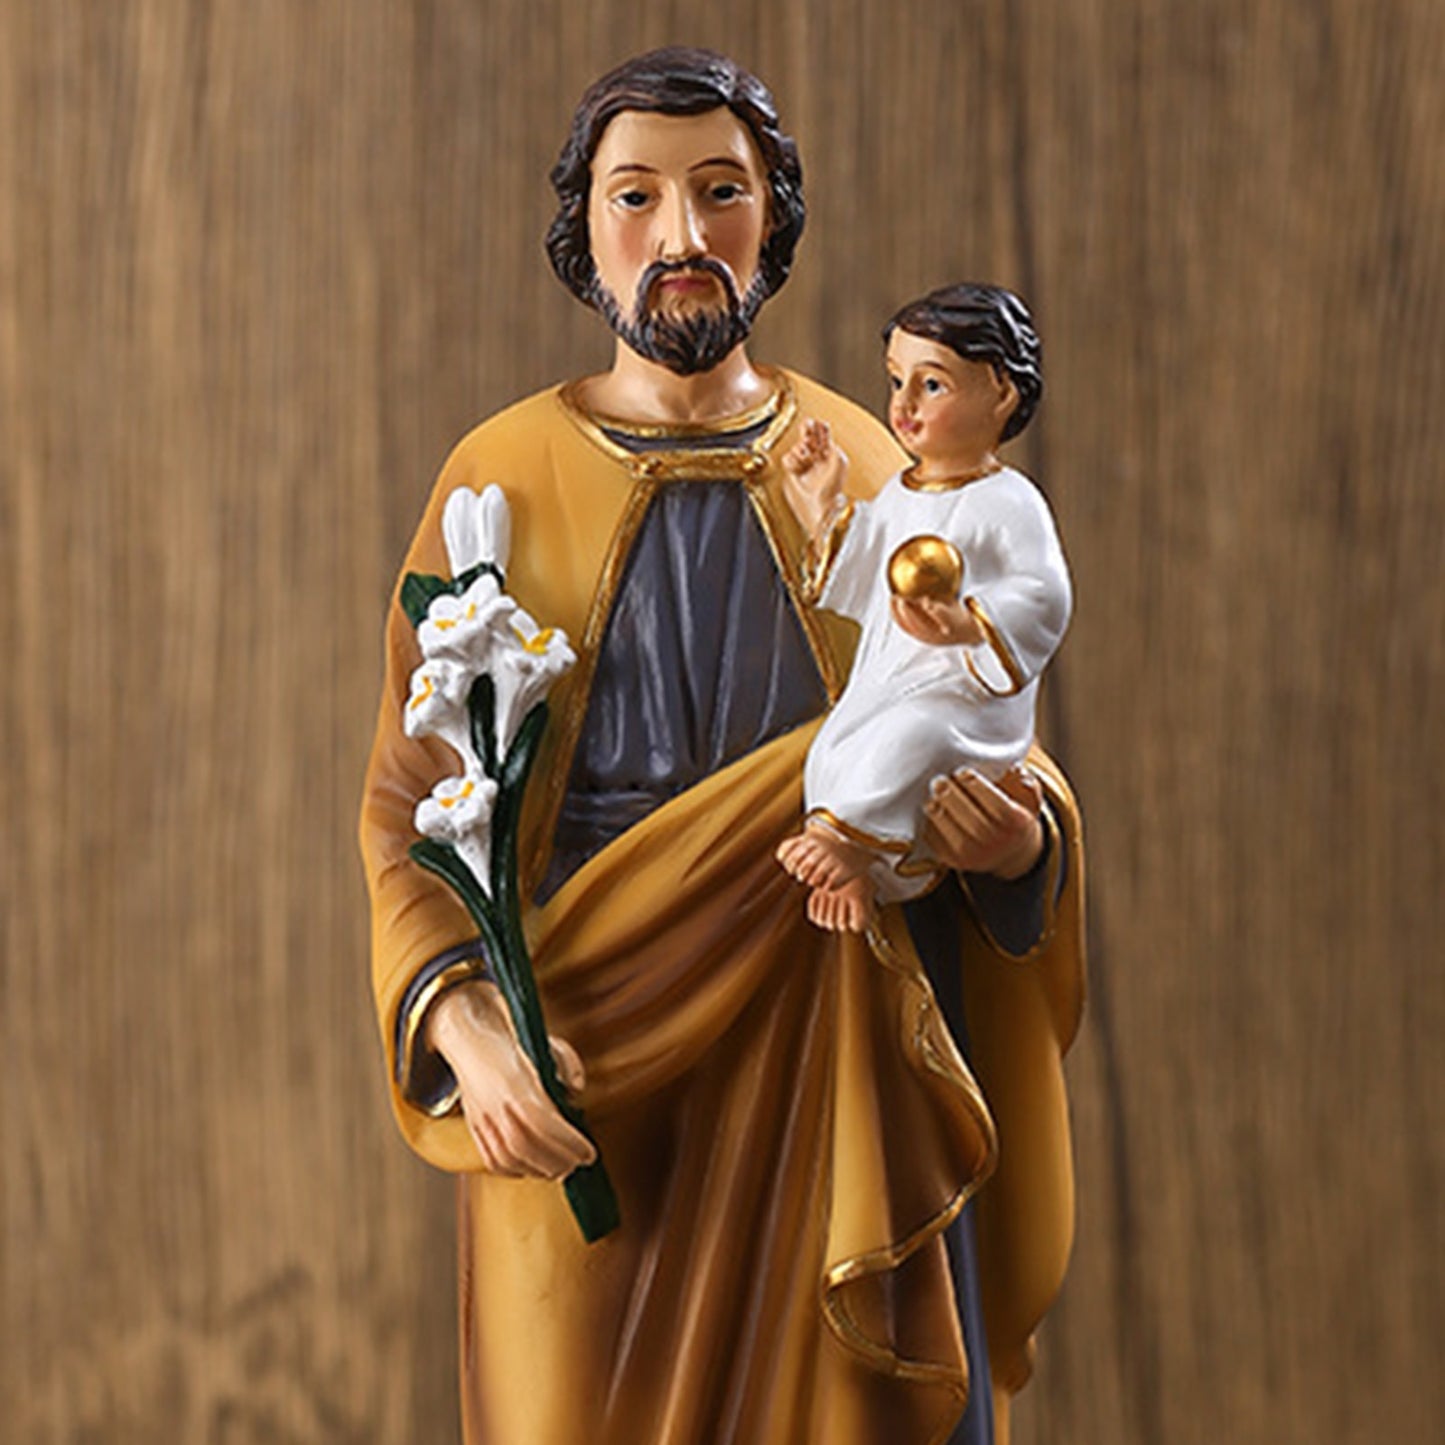 Escultura de San Jose Tabletop Decoration Resin St Joseph with Child Jesus Figure Colored Religious Statue